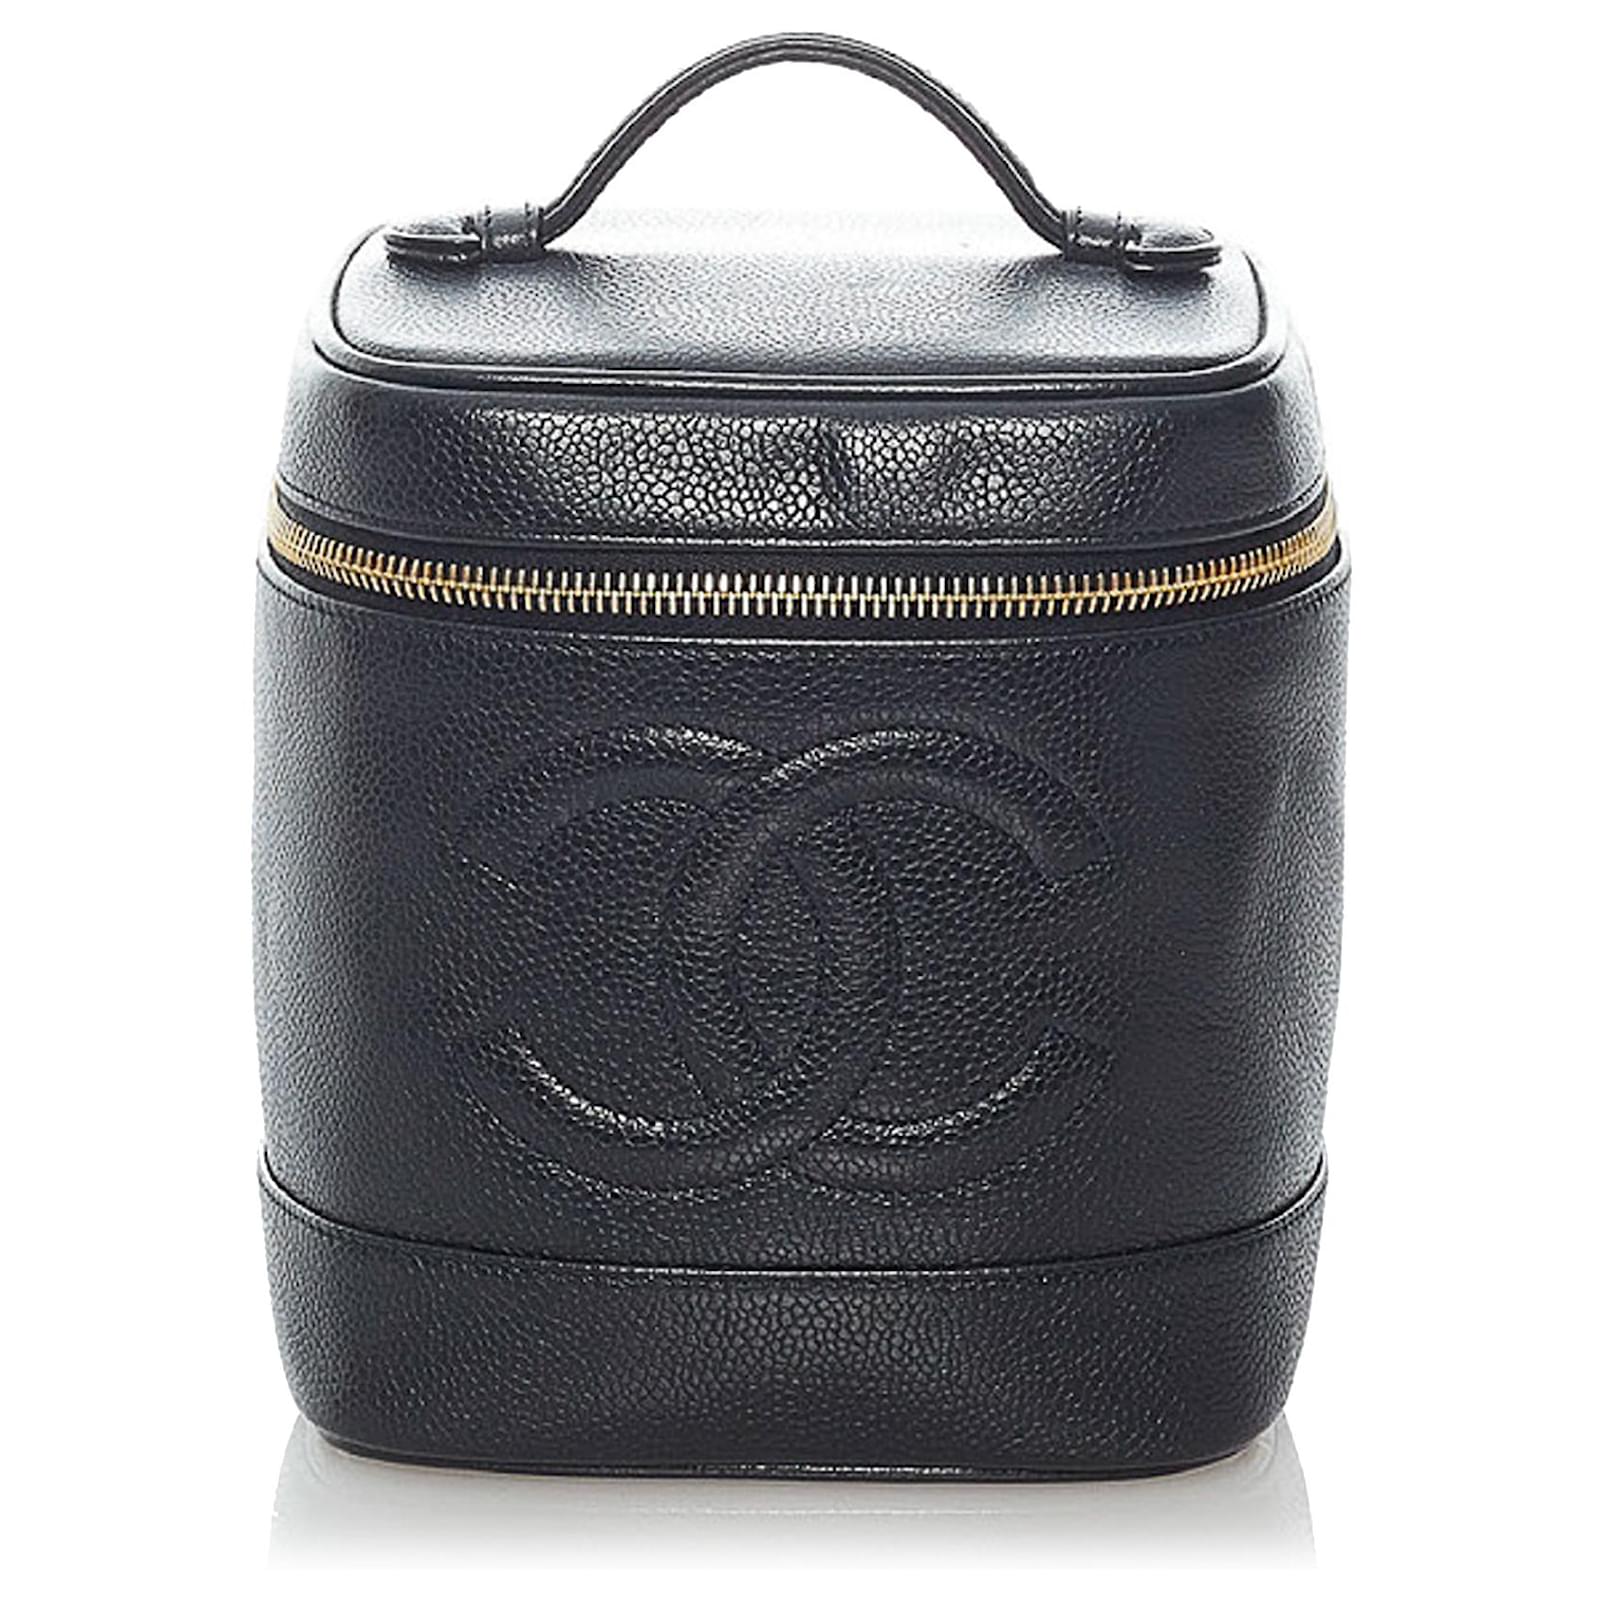 Chanel Cc Caviar Leather Vanity Bag